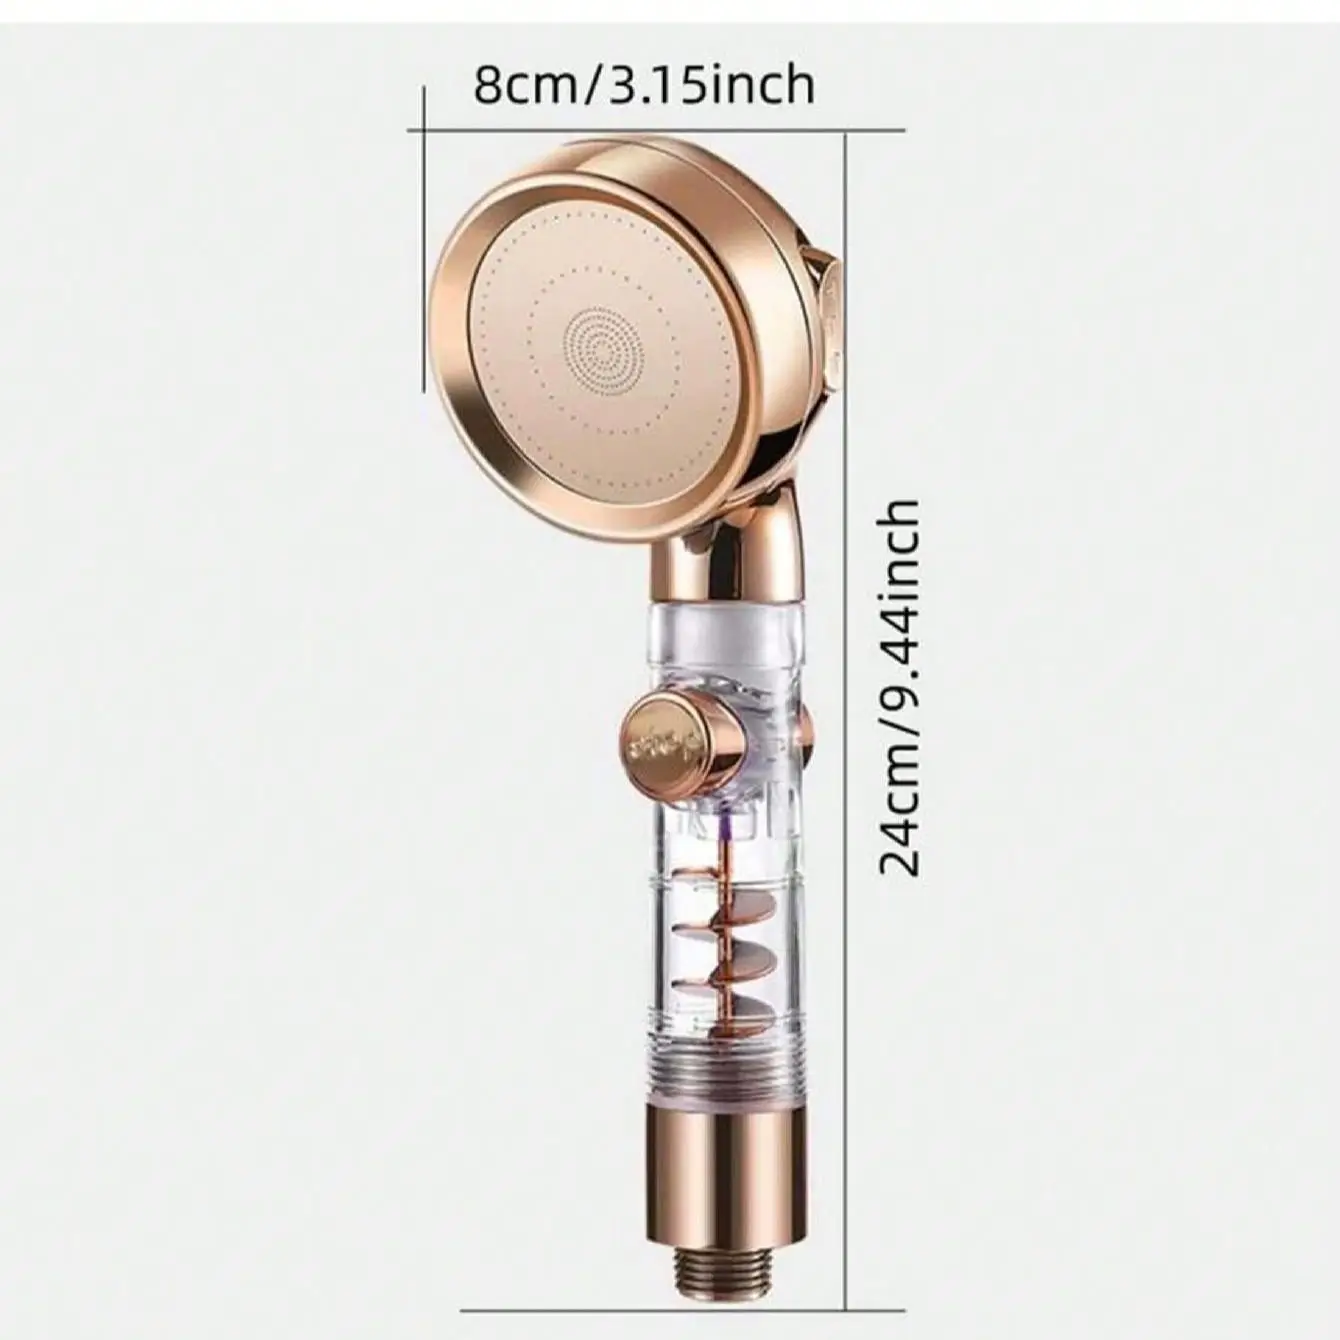 1PC- Turbocharged Shower Head New 3 Mode High Pressure Adjustable Filter Rain Turbine One Button Stop Water Saving